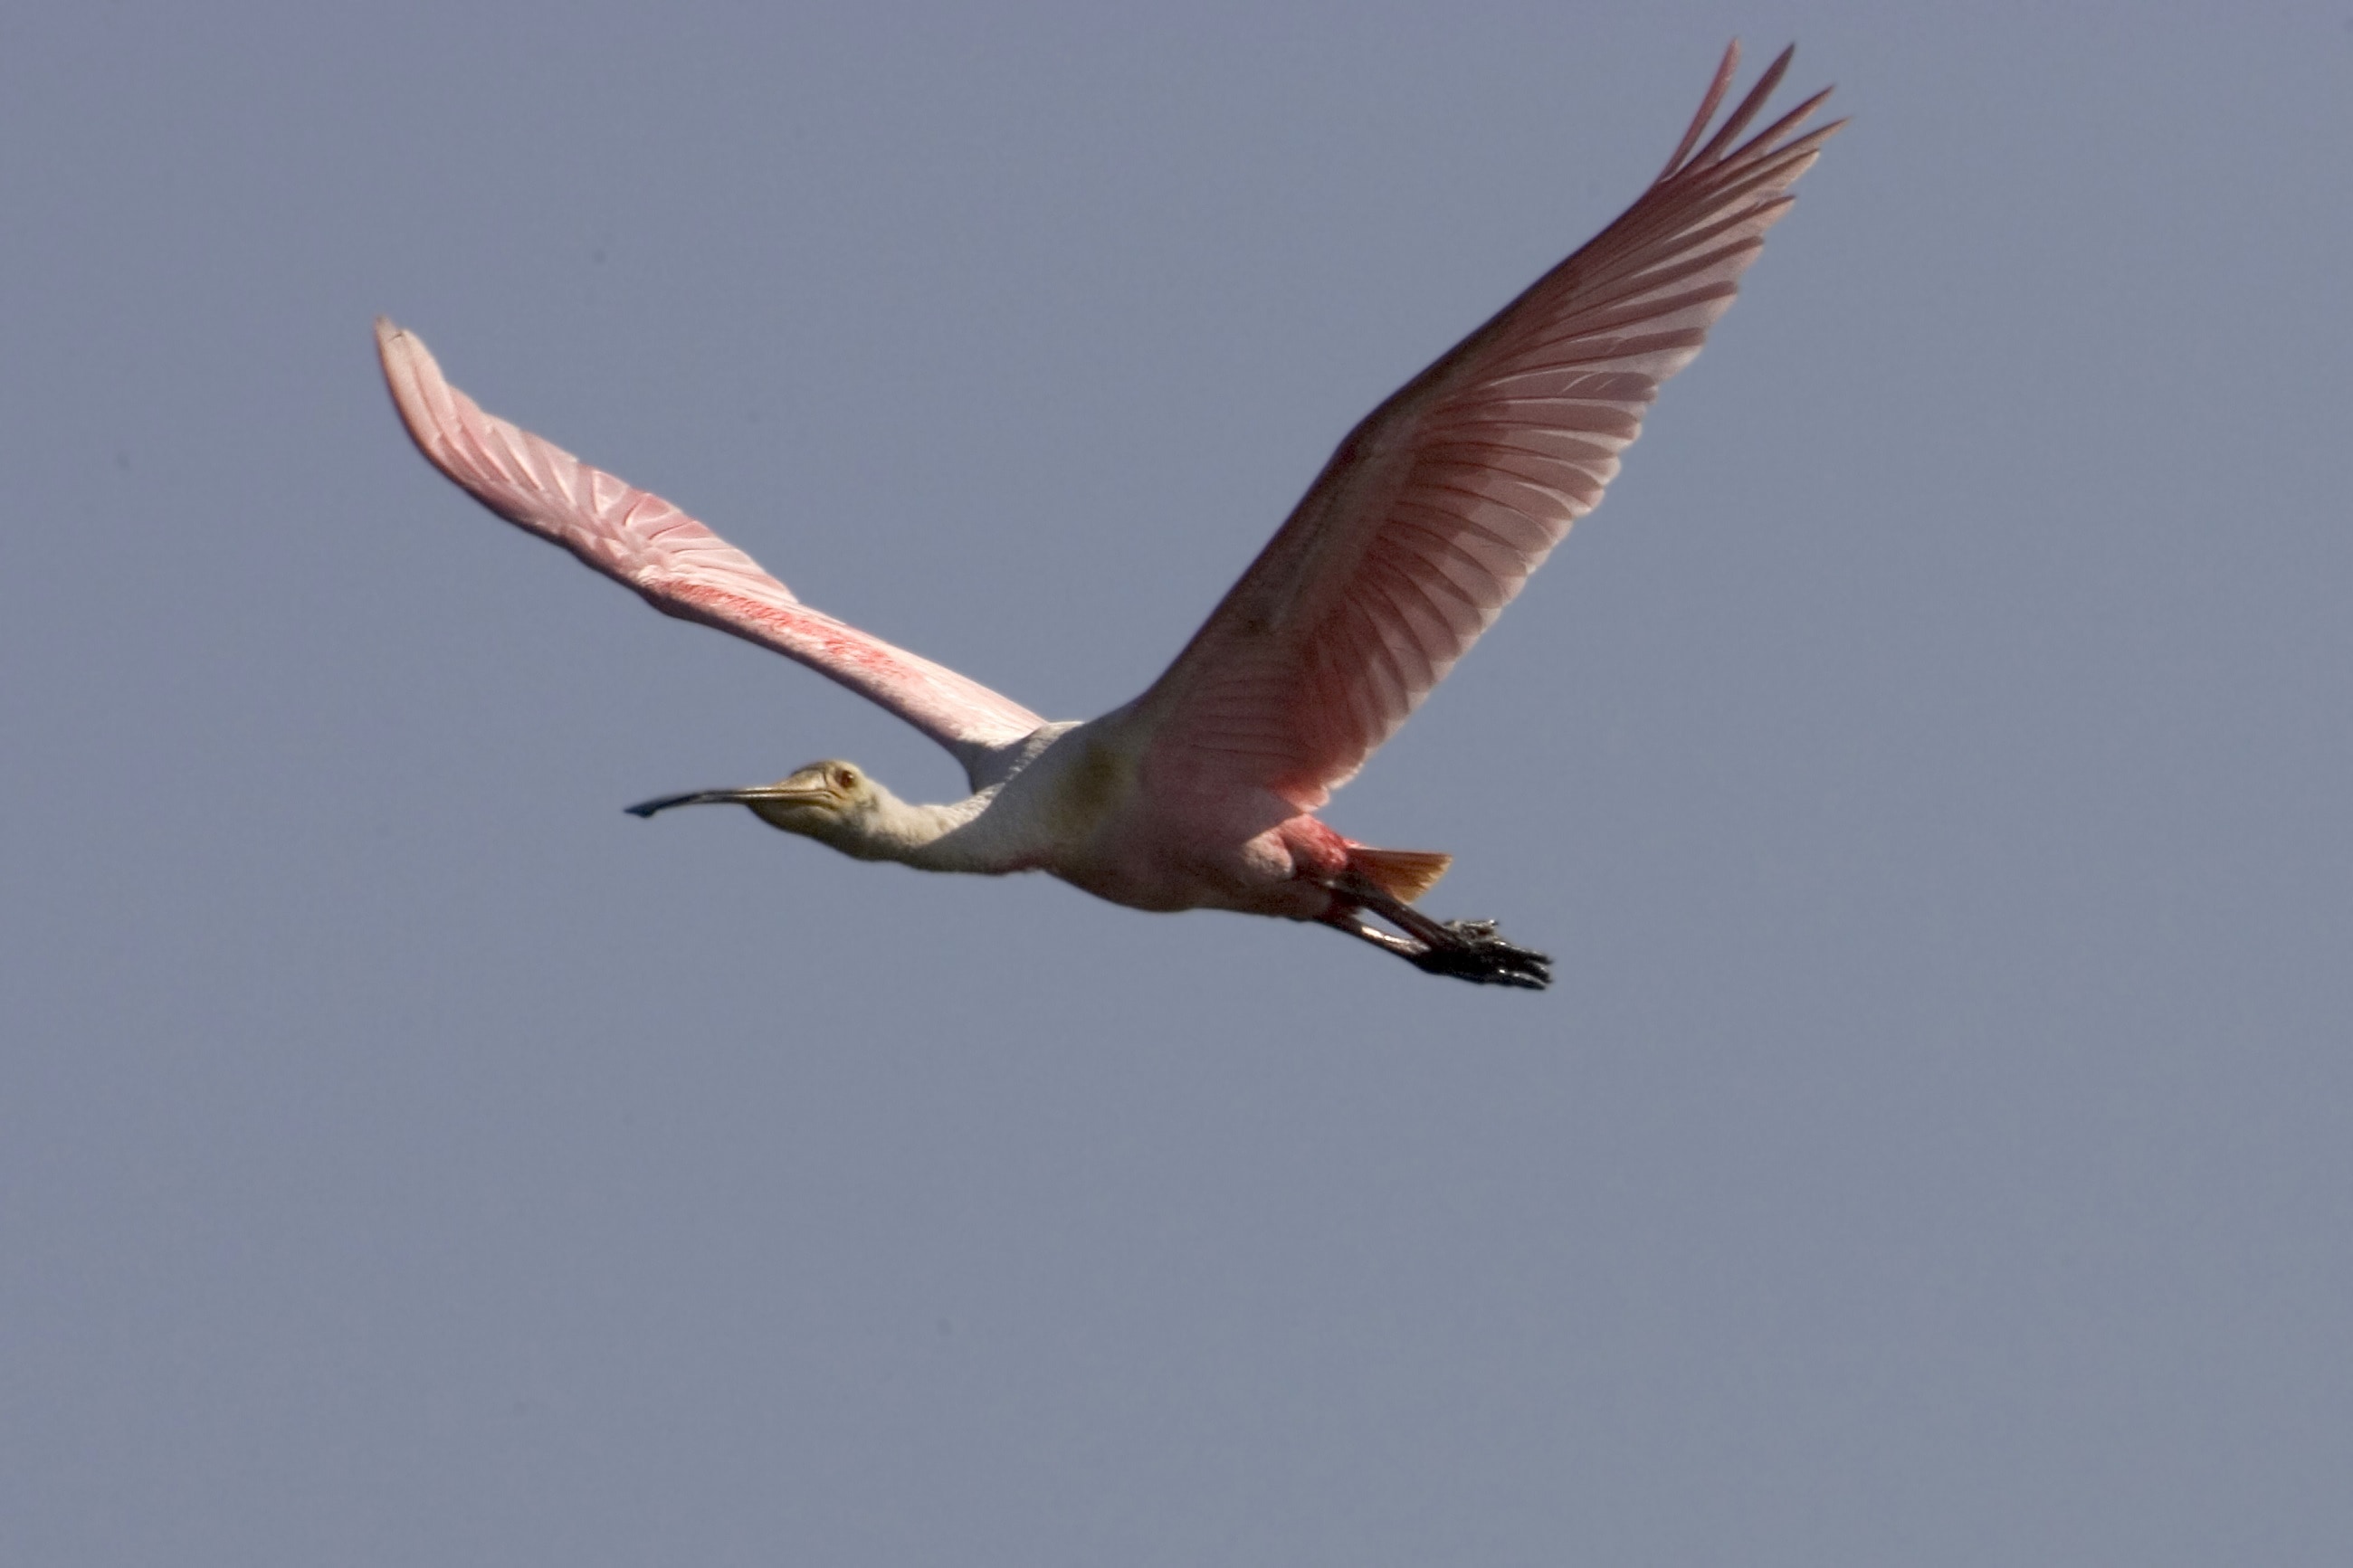 white and pink bird